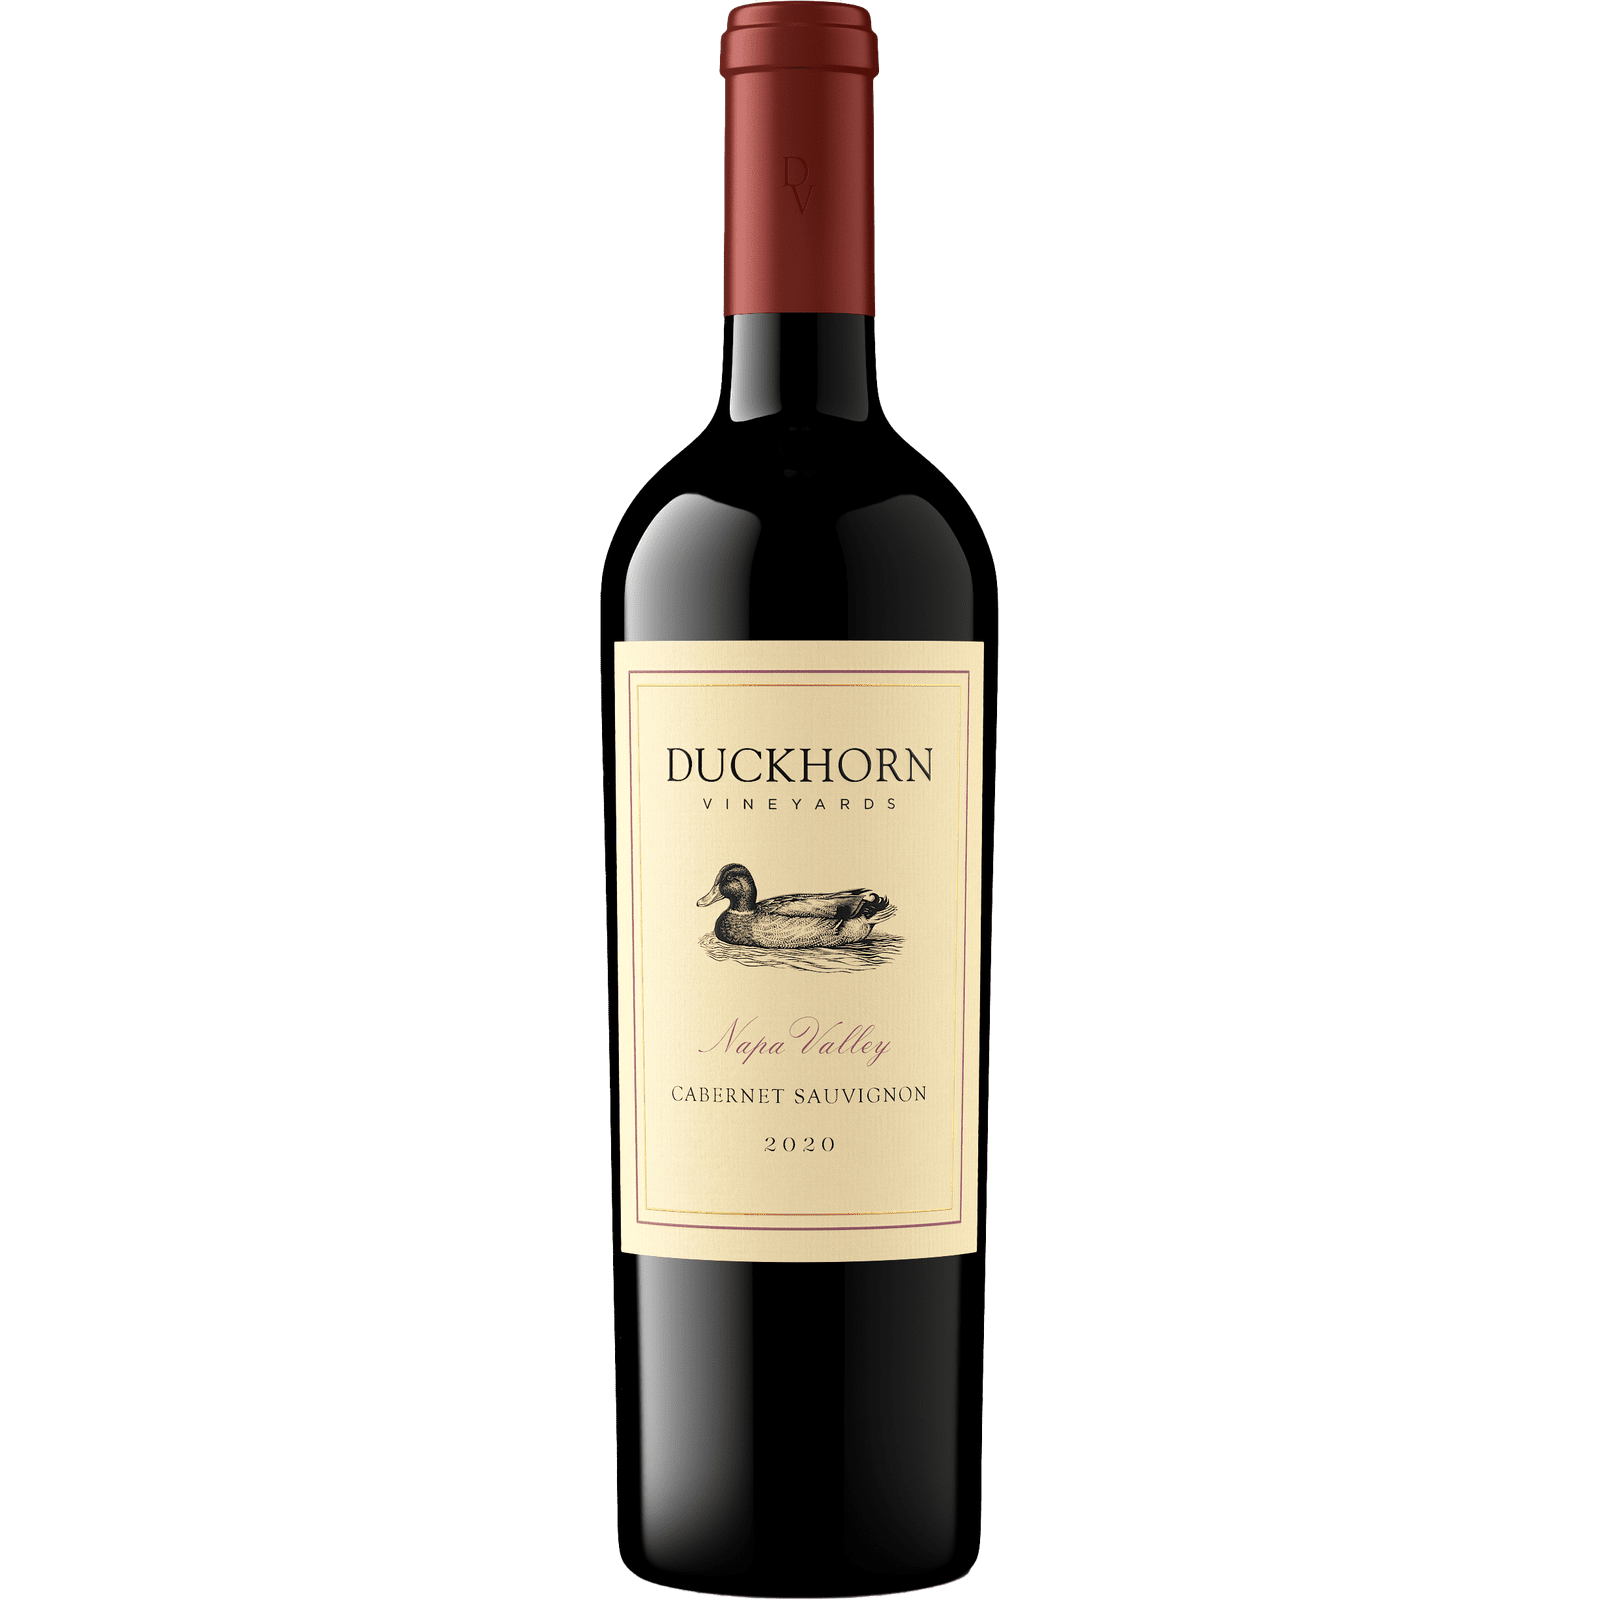 Duckhorn Vineyards Napa Valley Cabernet Sauvignon 2020 - The General Wine Company